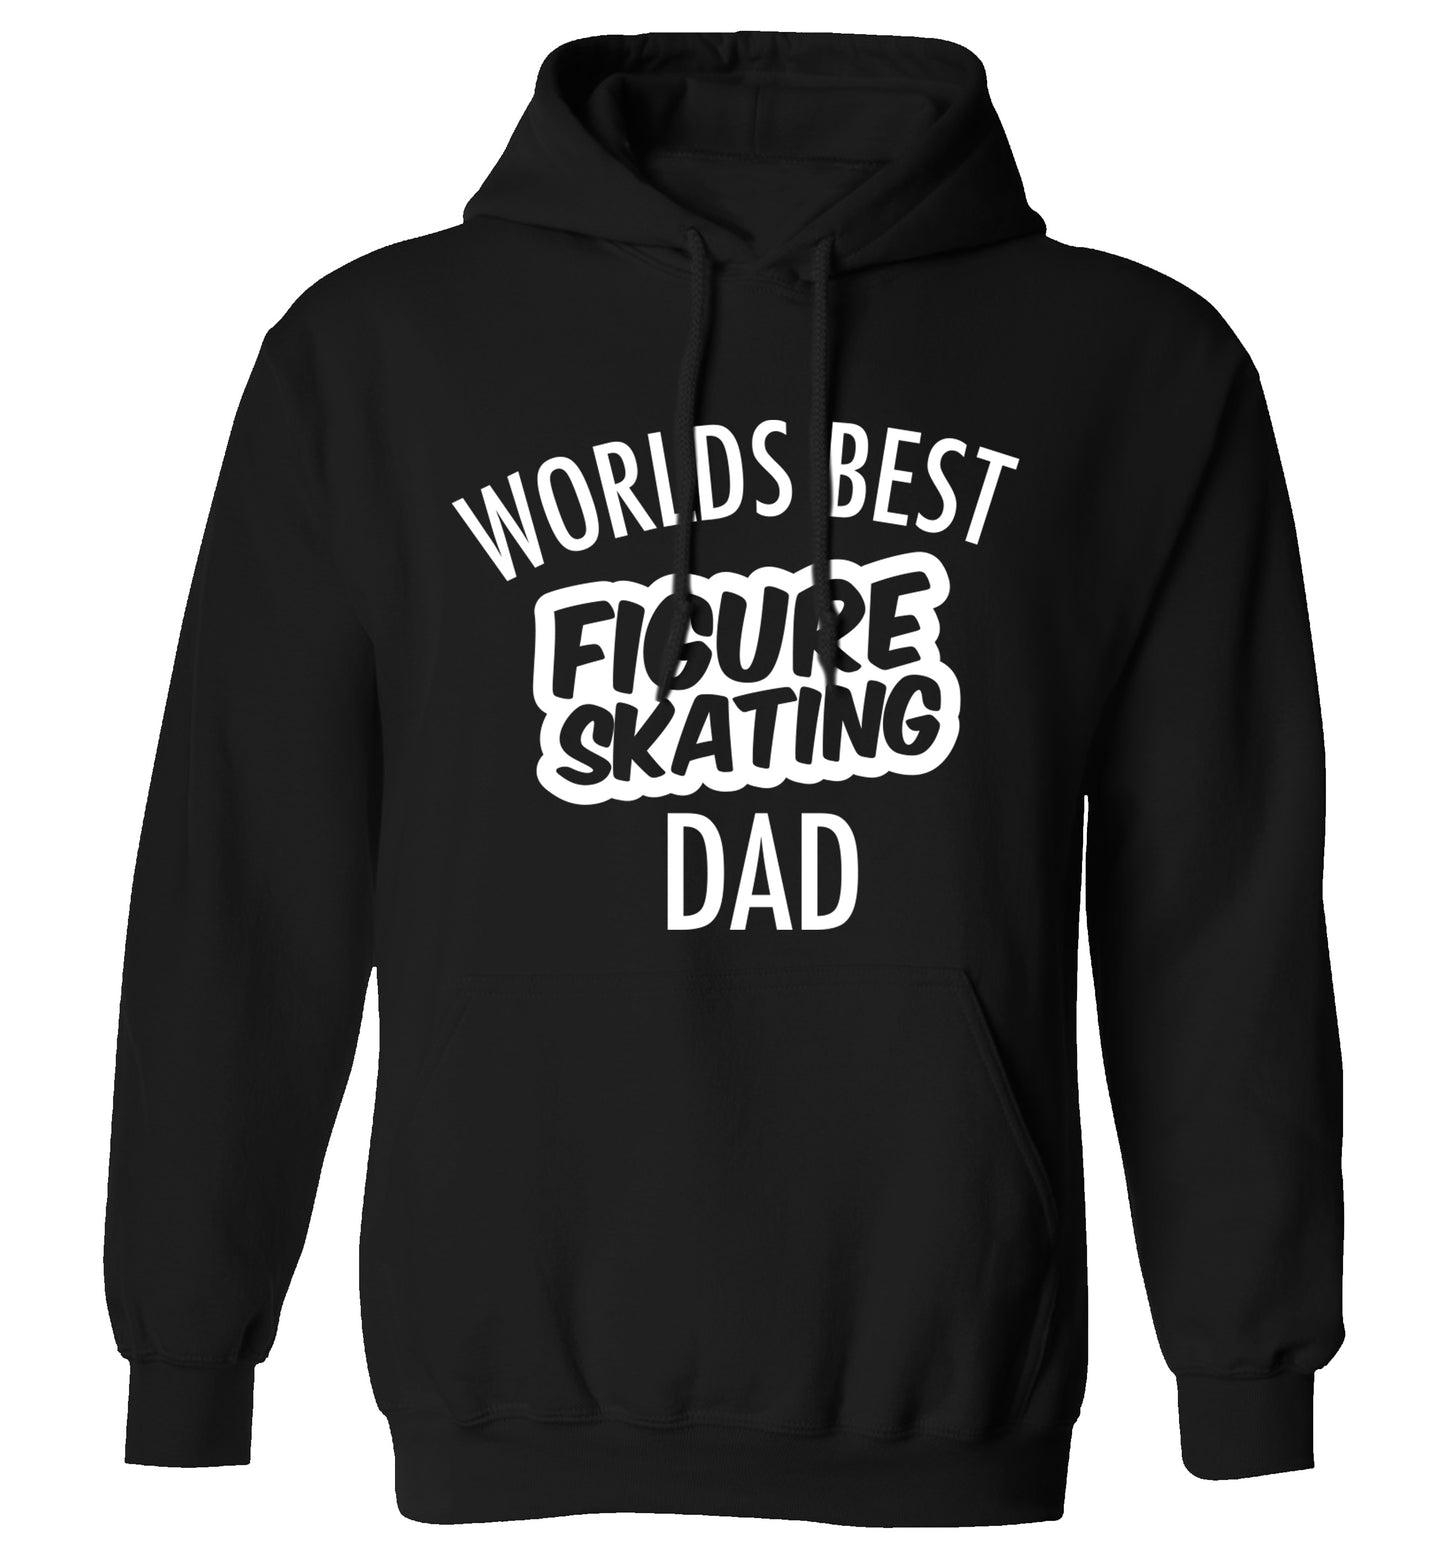 Worlds best figure skating dad adults unisexblack hoodie 2XL